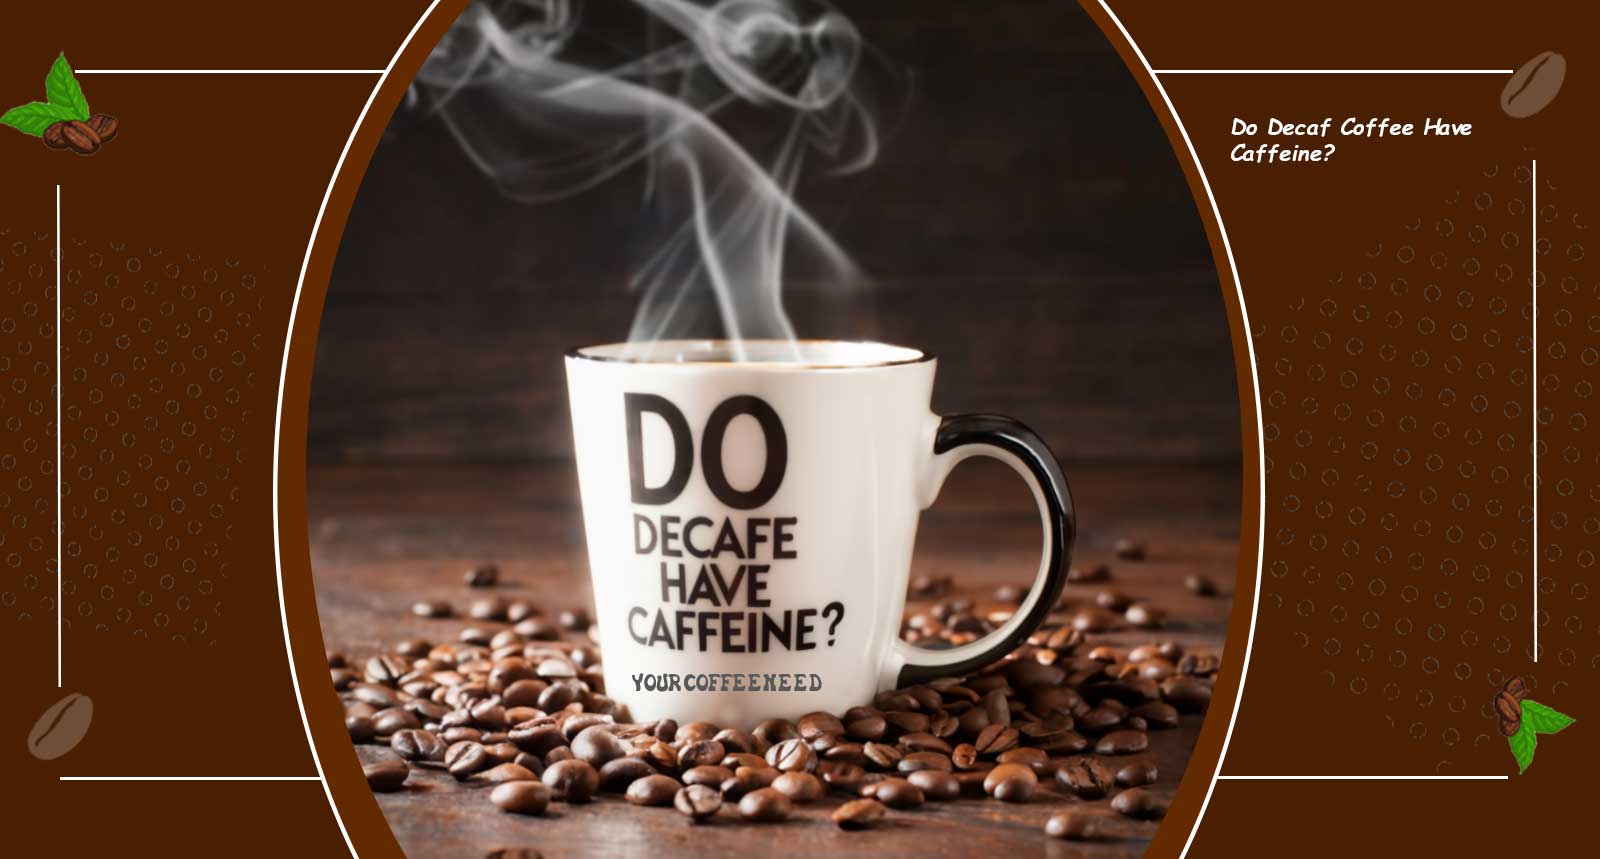 Do Decaf Coffee Have Caffeine?